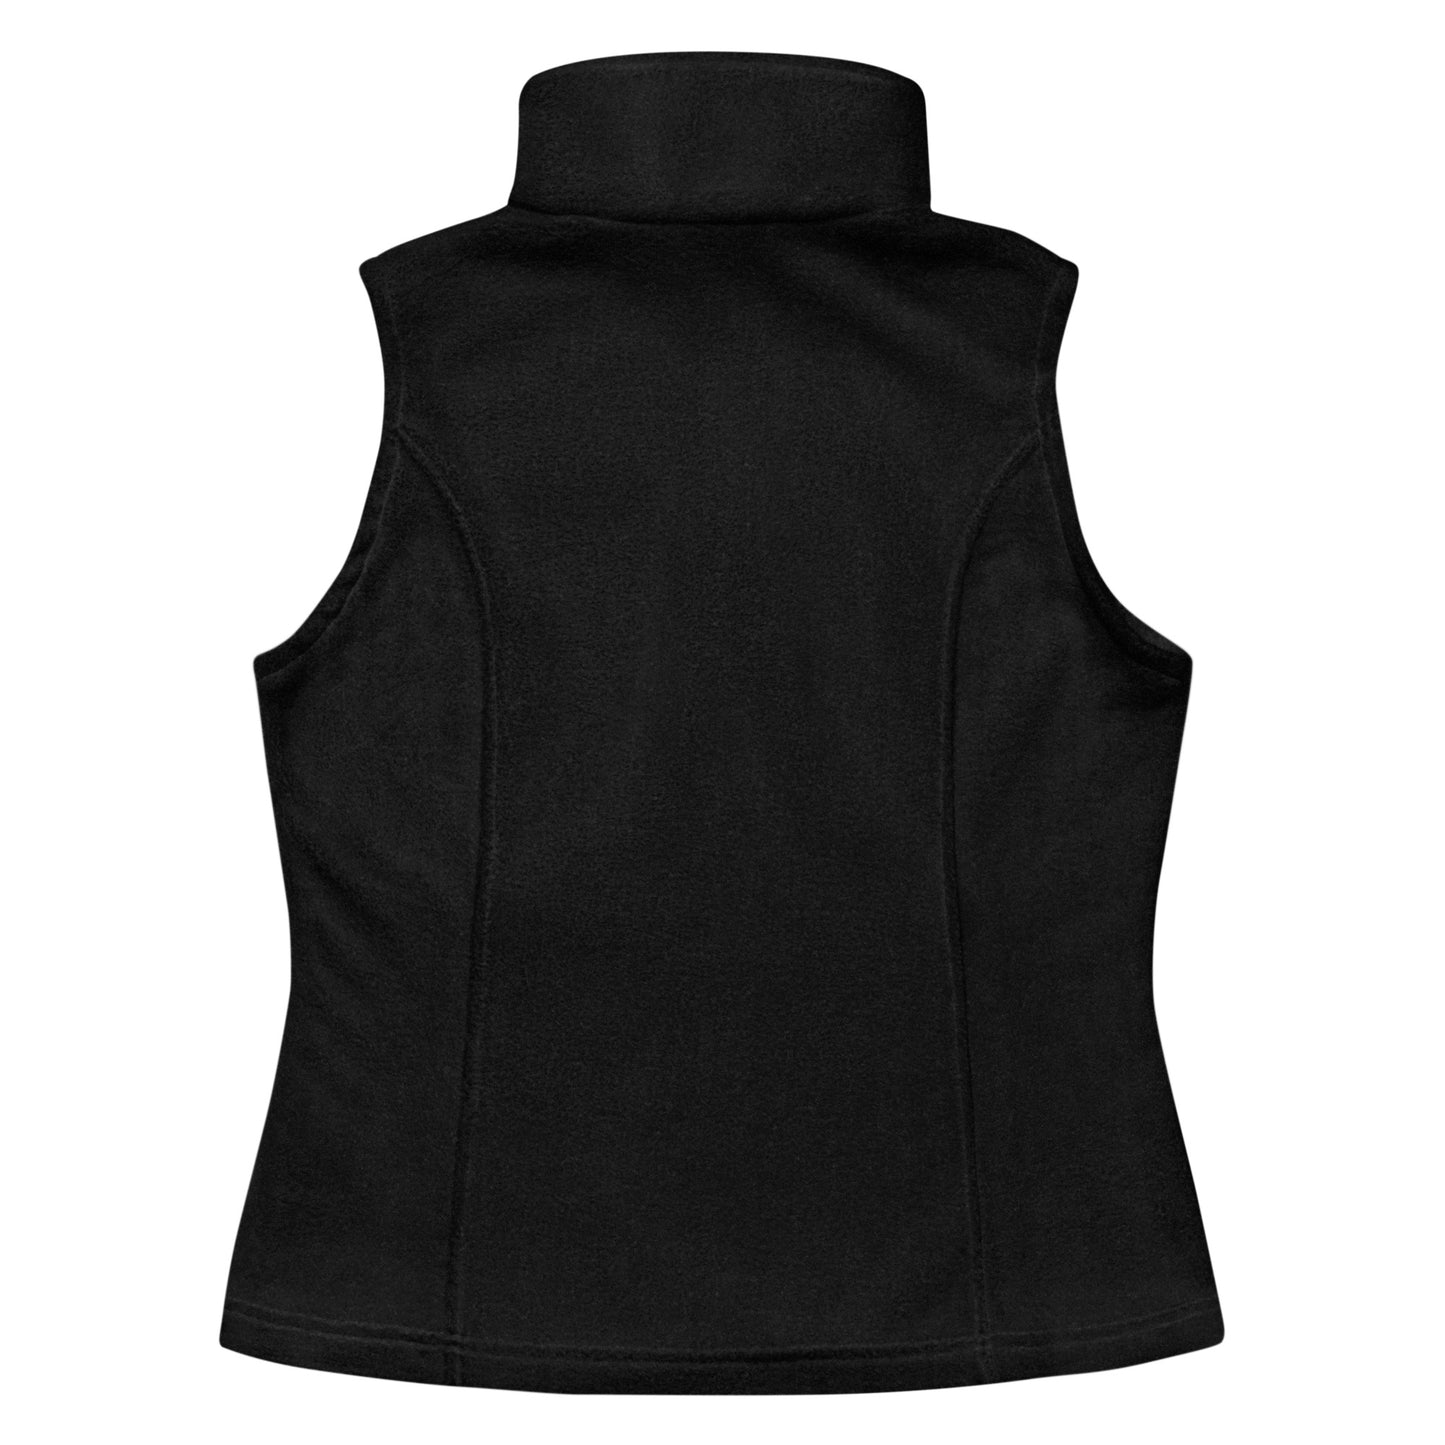 Chessable Women’s Columbia fleece vest